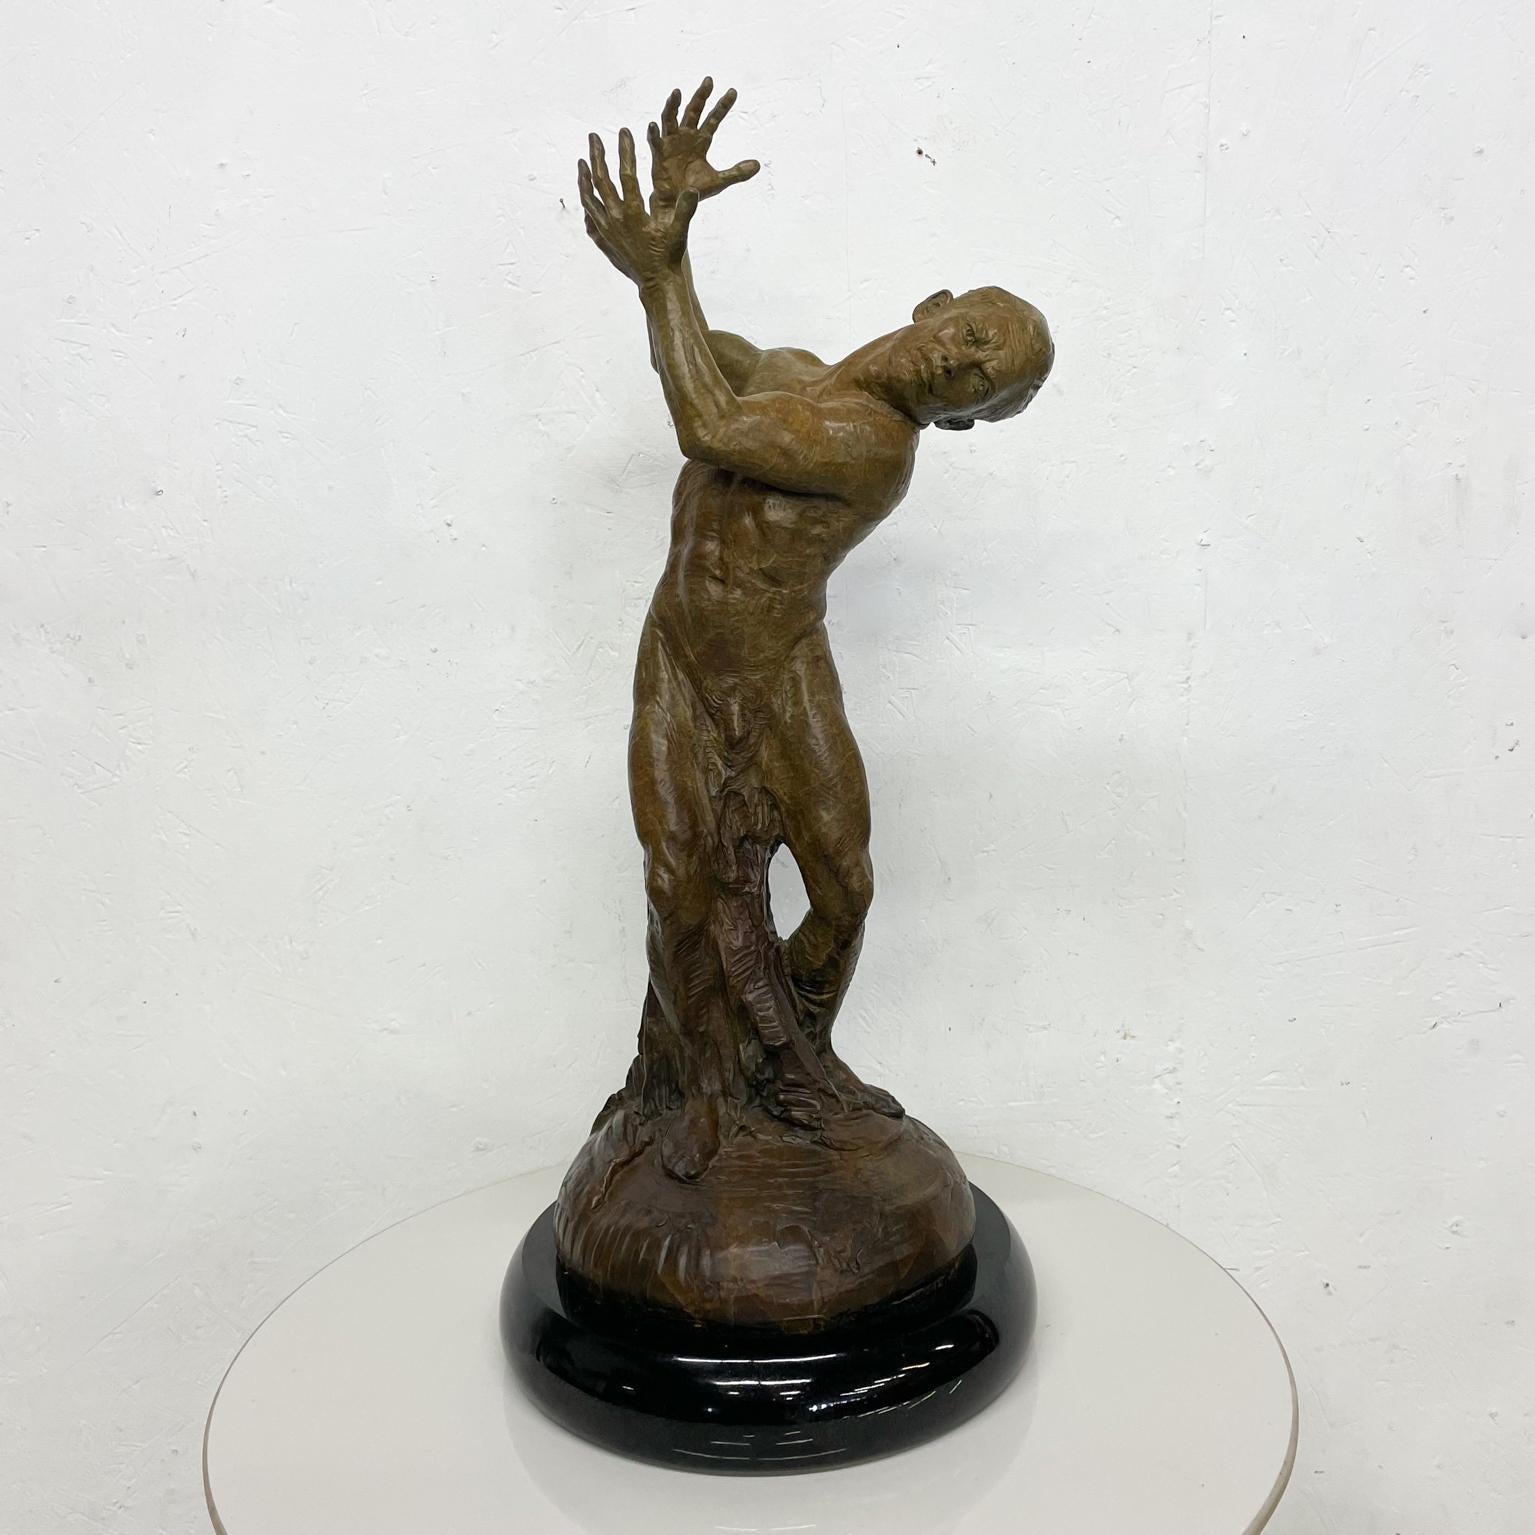 Bronze Sculpture
Sculptor Martin Eichinger figurative Bronze Art Narrative Sculpture: 